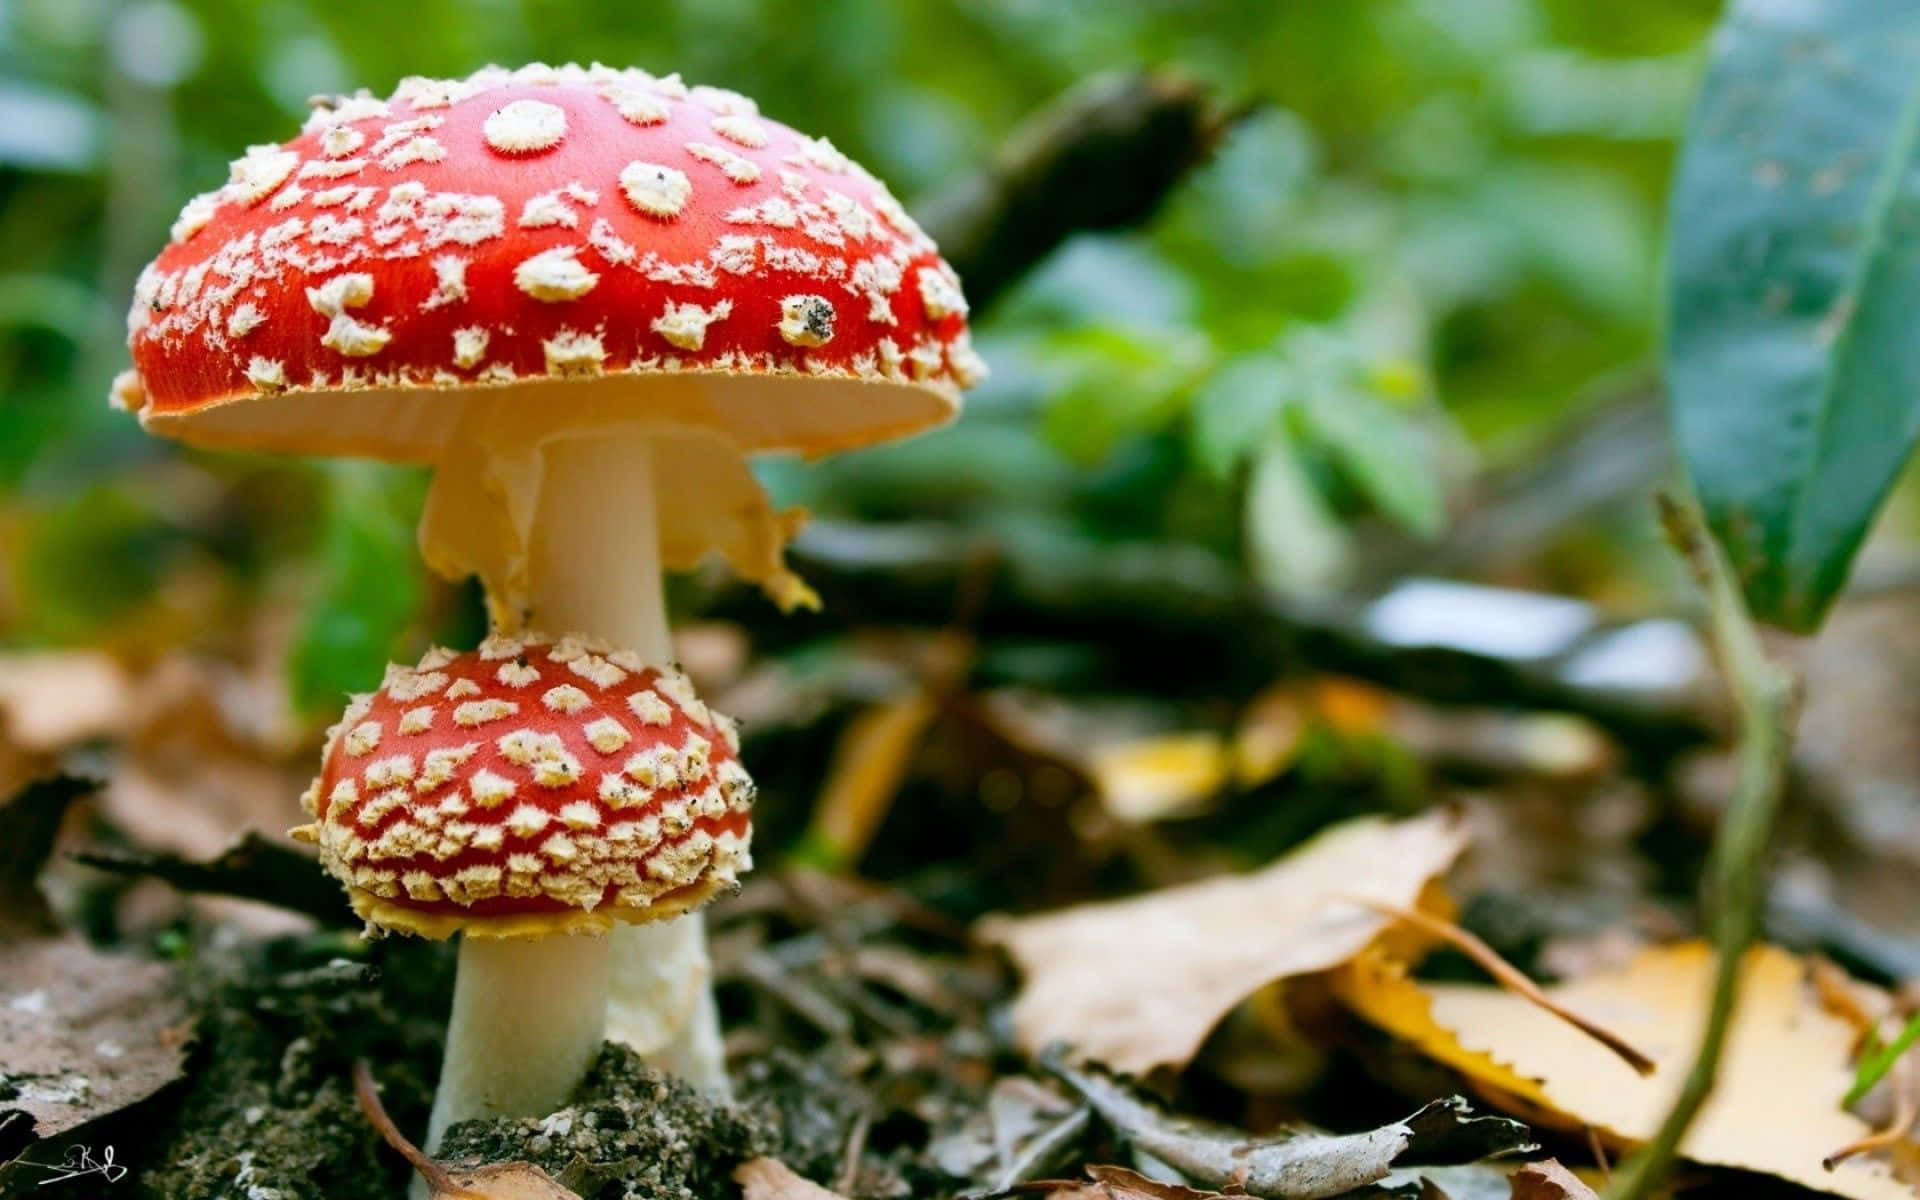 Enjoy the beauty of nature - A Red Mushroom Amongst Leaves